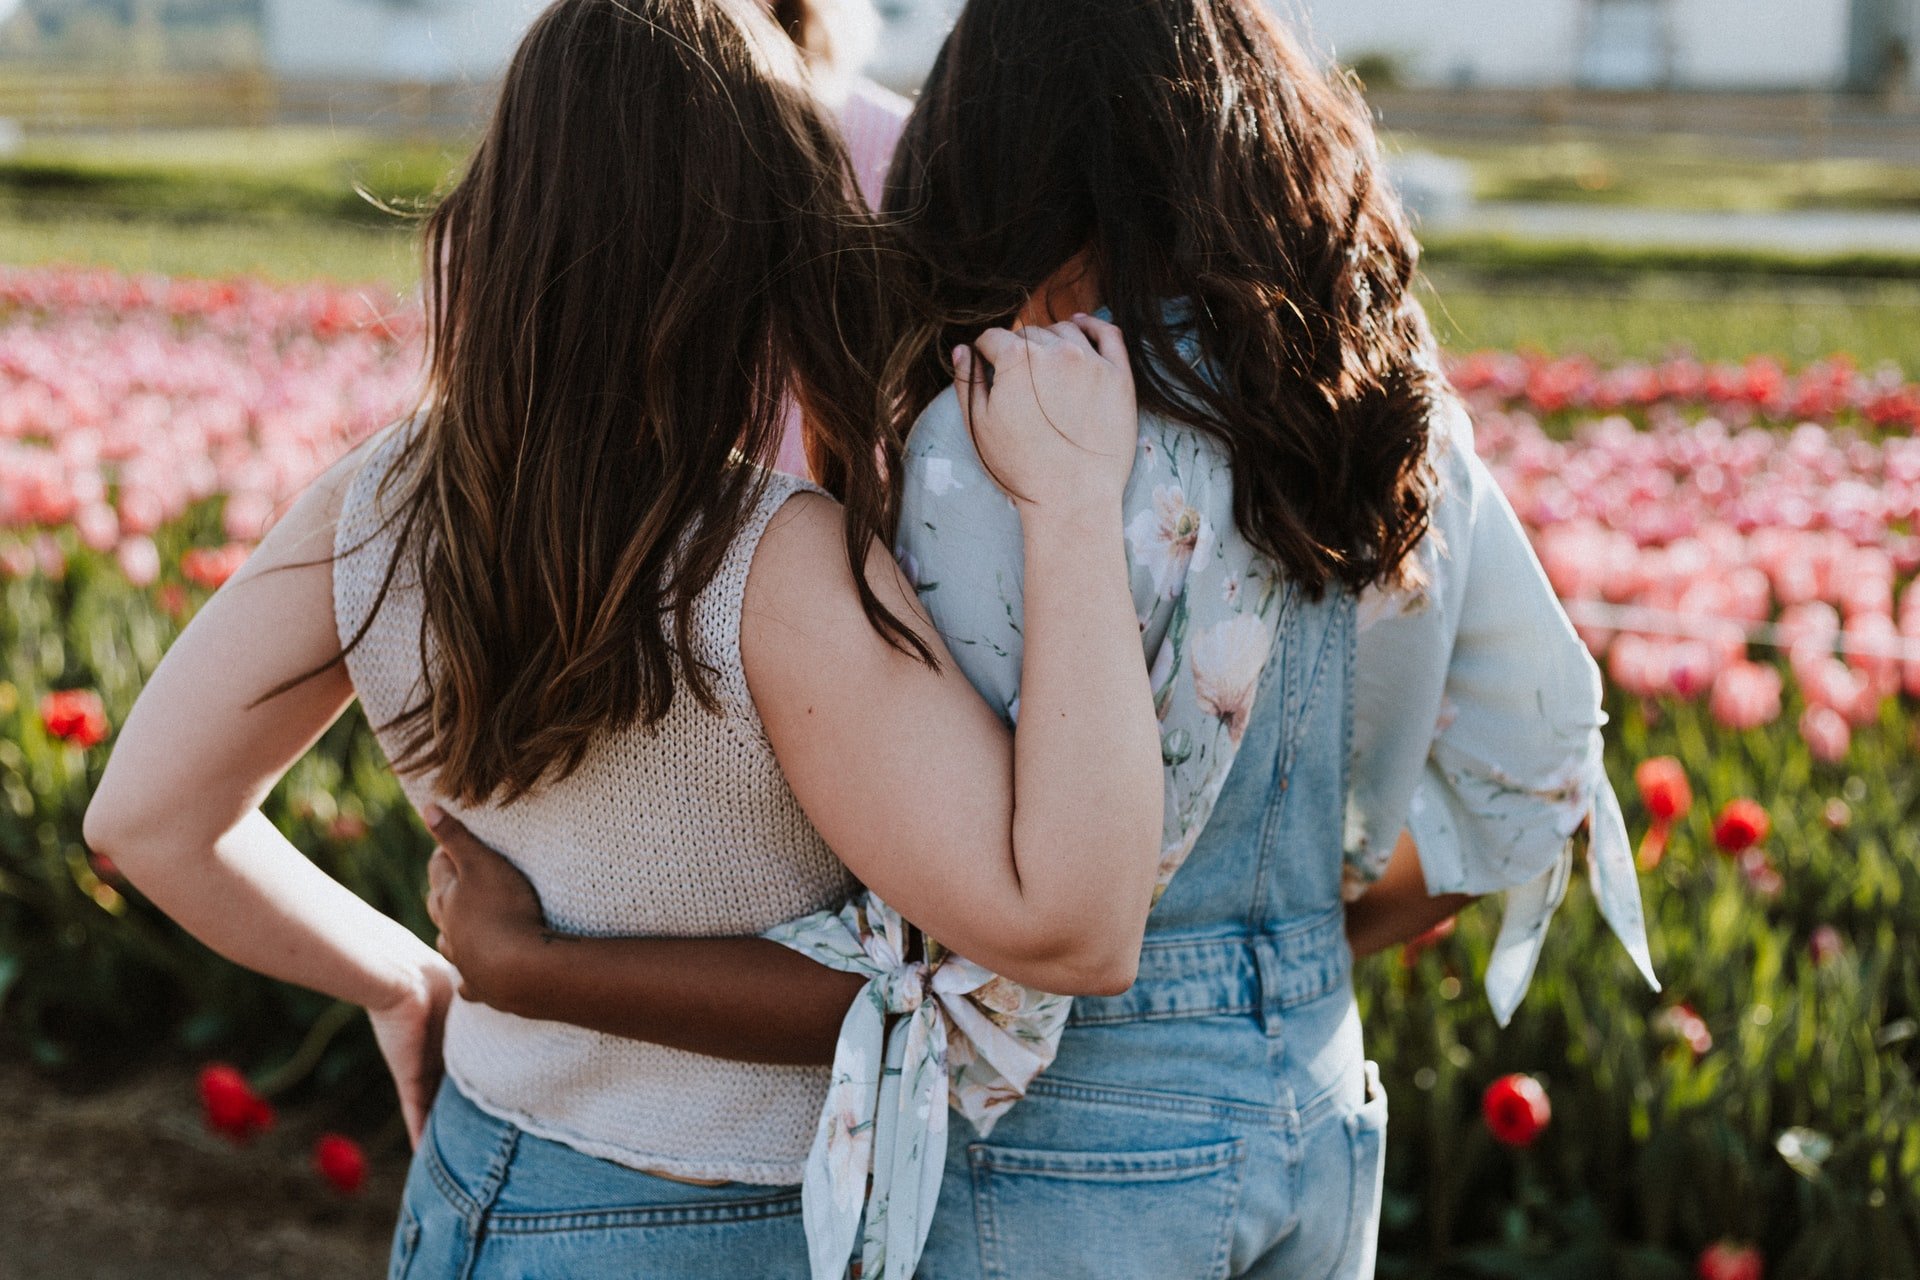 Two girls standing in front of flower field | Source: Unsplash